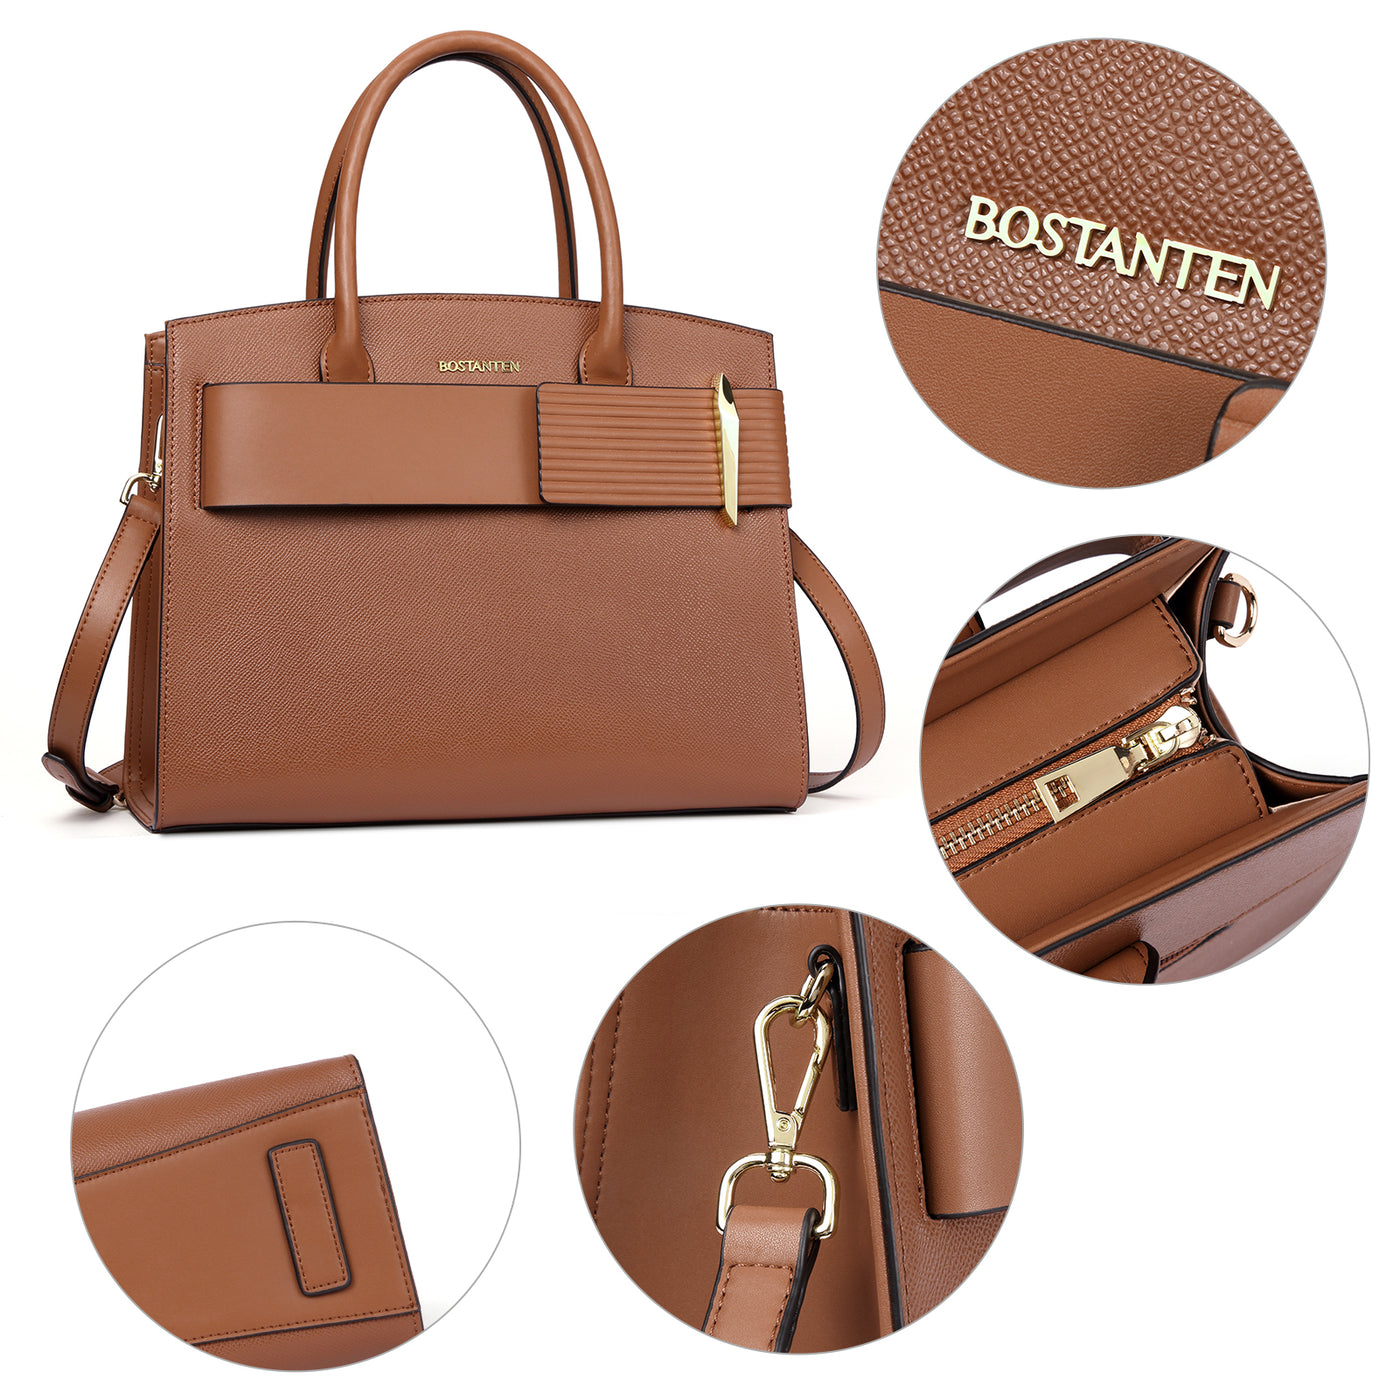 Leather Designer Tote Bag - Perfect for the Fashion-Forward Professiona